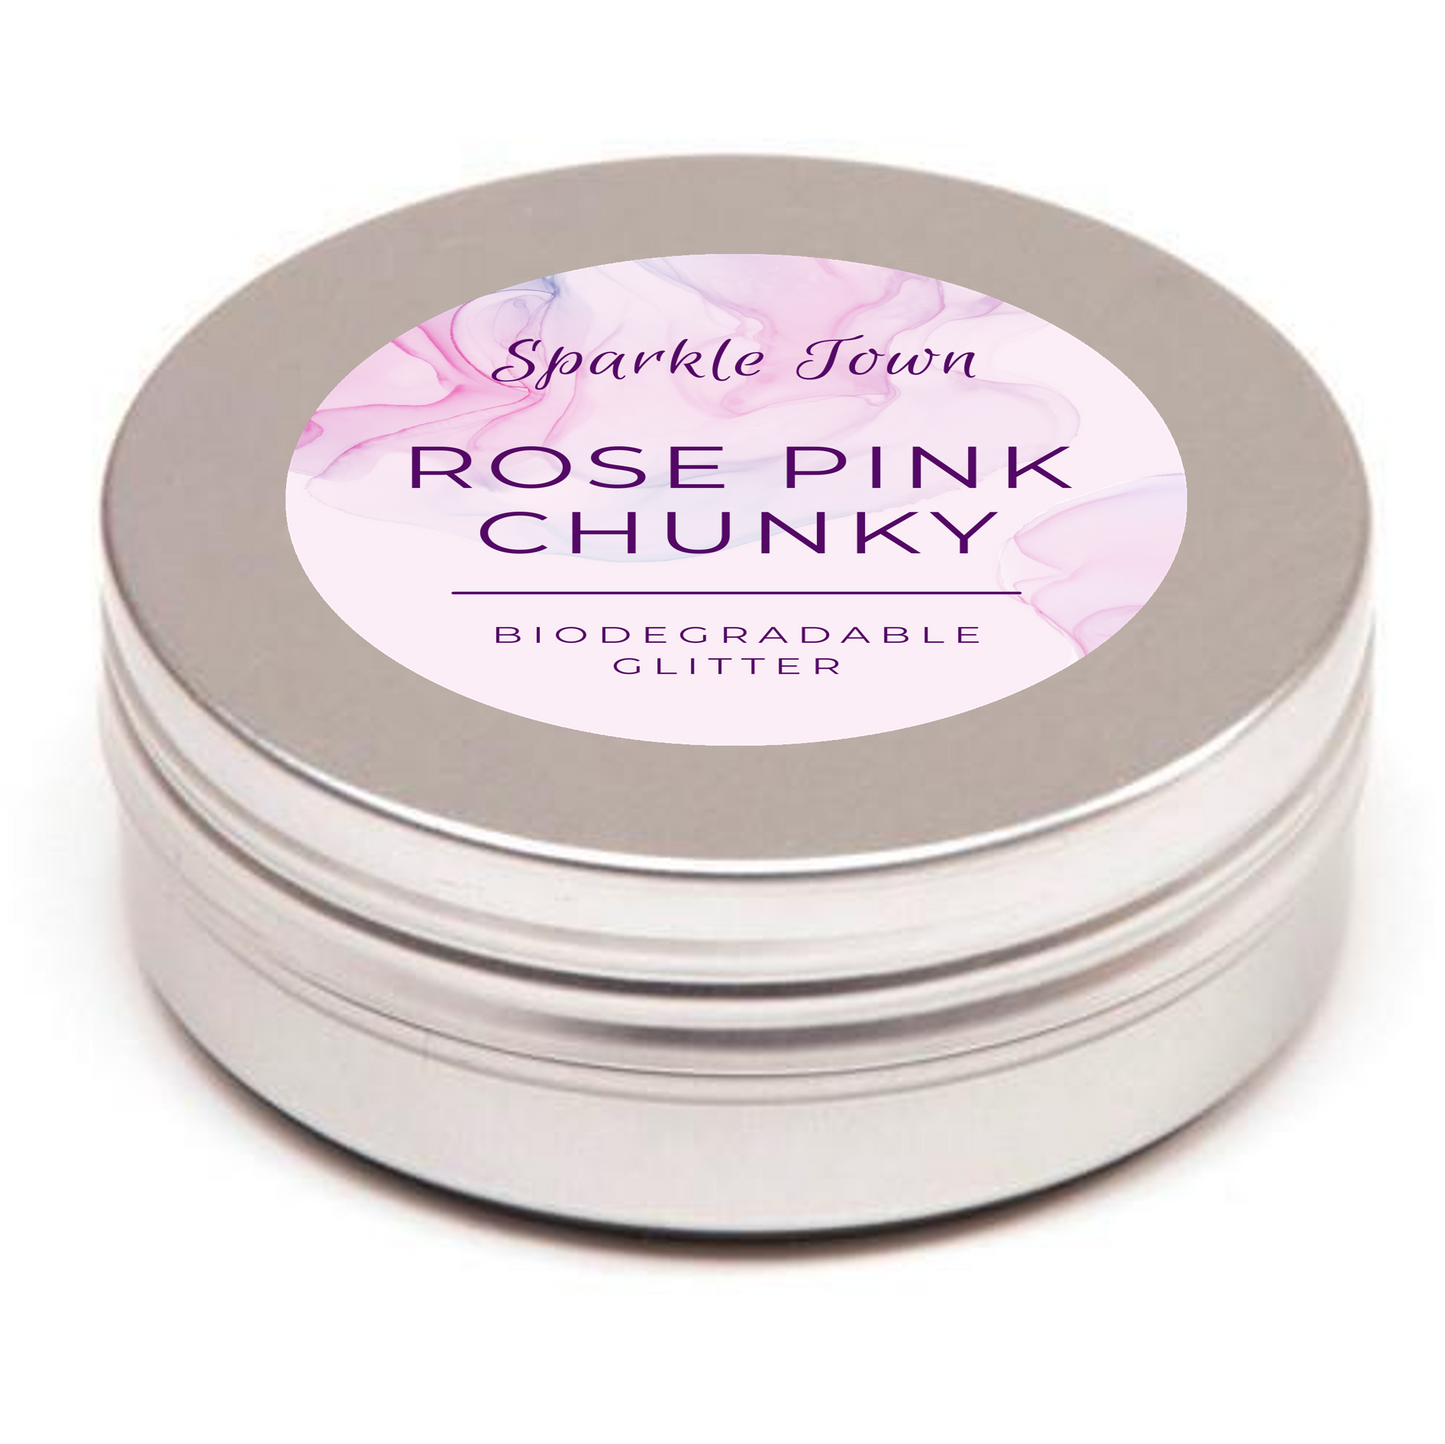 Rose Pink Chunky Biodegradable Glitter